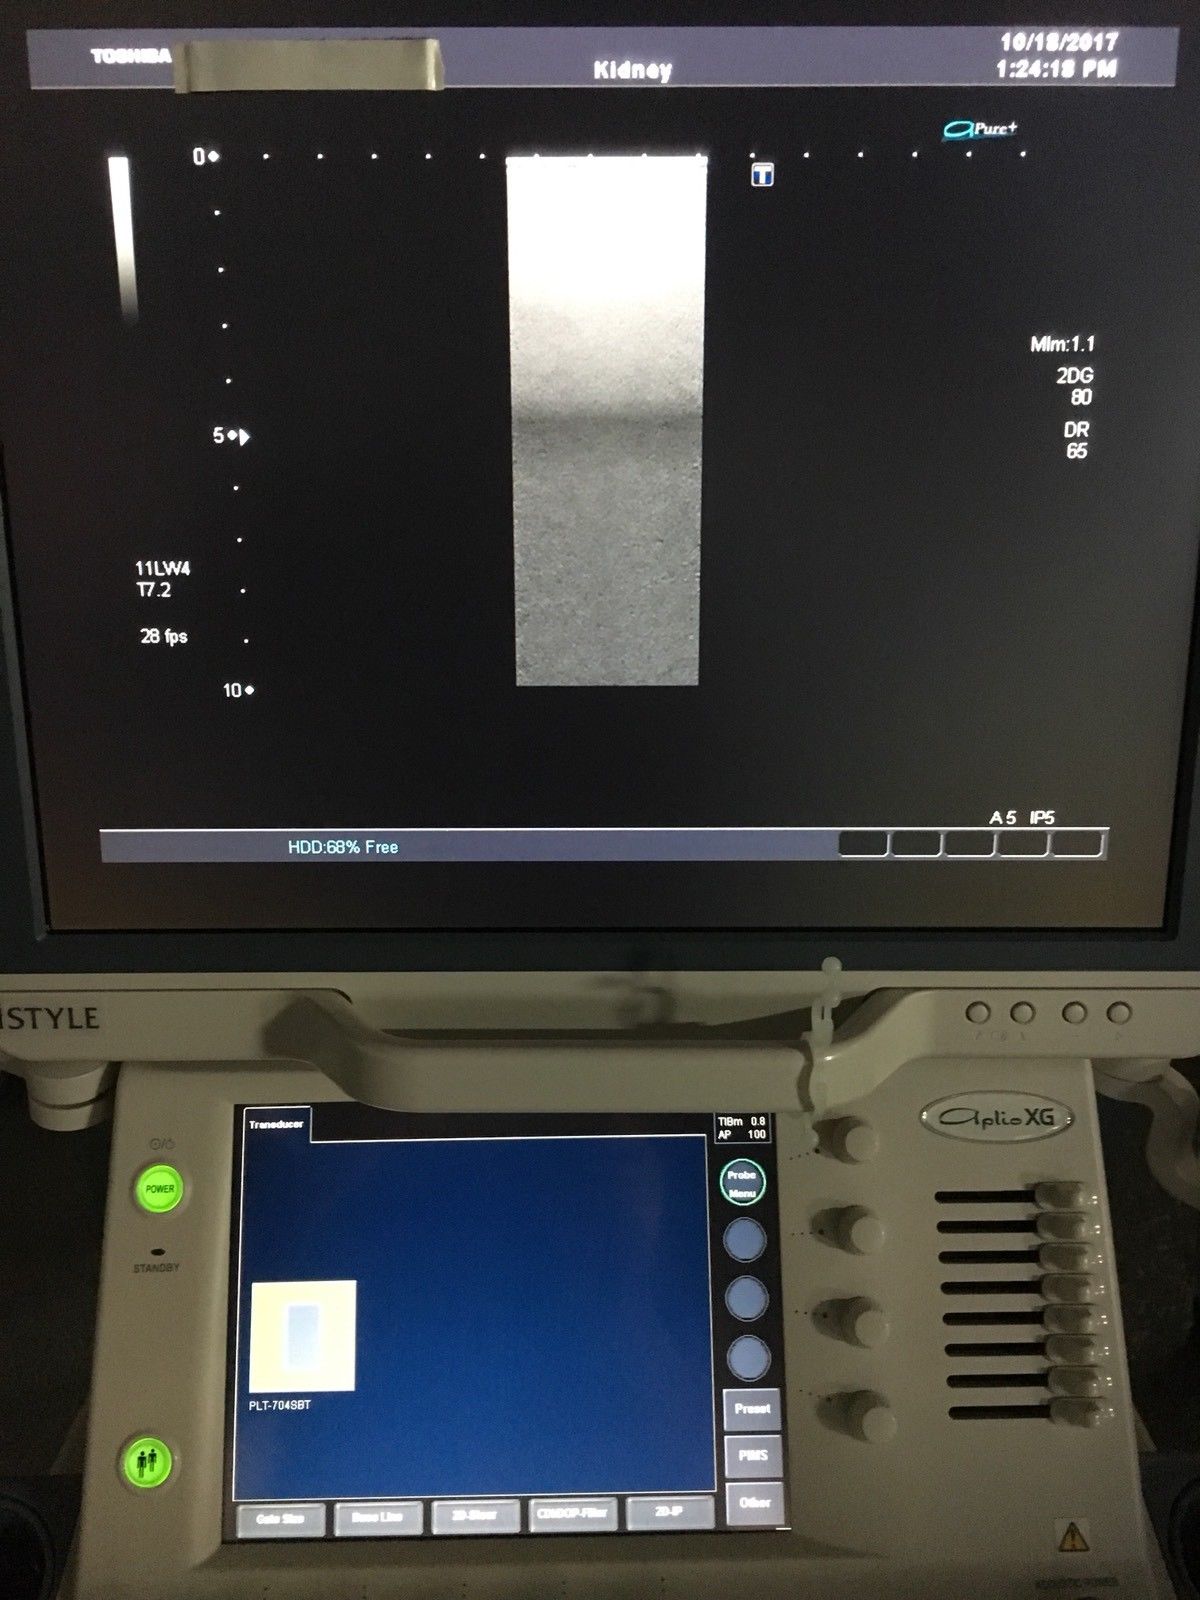 Toshiba Aplio PLT-704SBT Ultrasound Linear Array Vascular Transducer Probe DIAGNOSTIC ULTRASOUND MACHINES FOR SALE